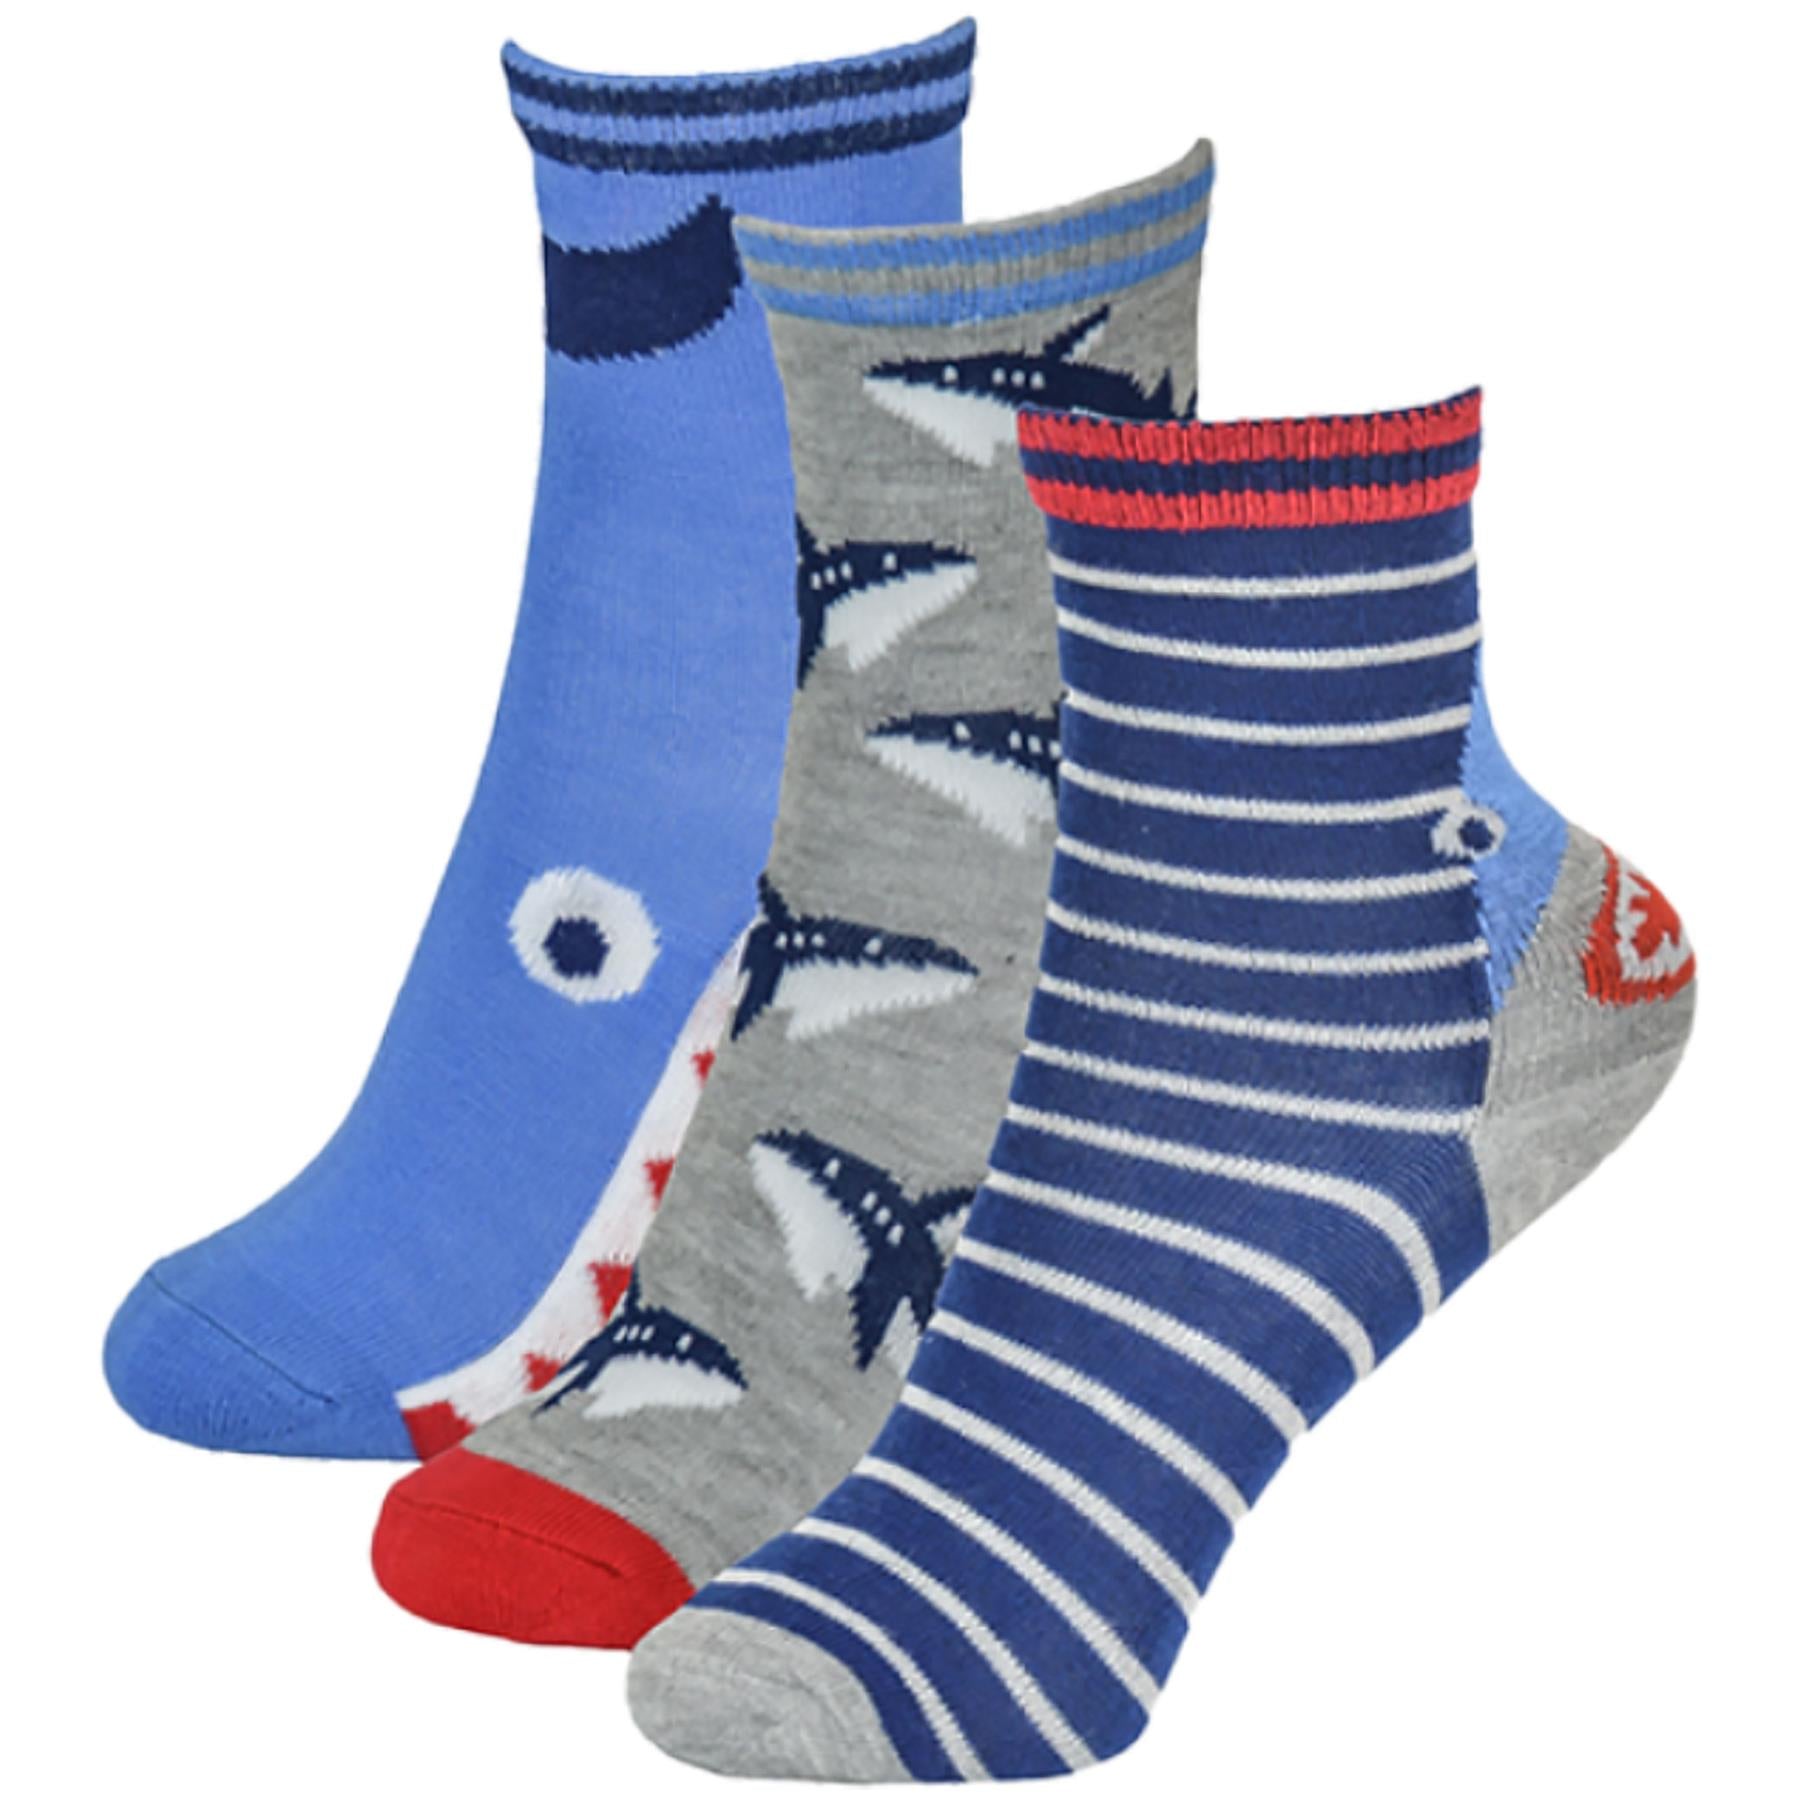 Kids Boys Bamboo Dinosaur and Shark Socks Pack of 3 Kids Footwear Socks 2-10 Yr